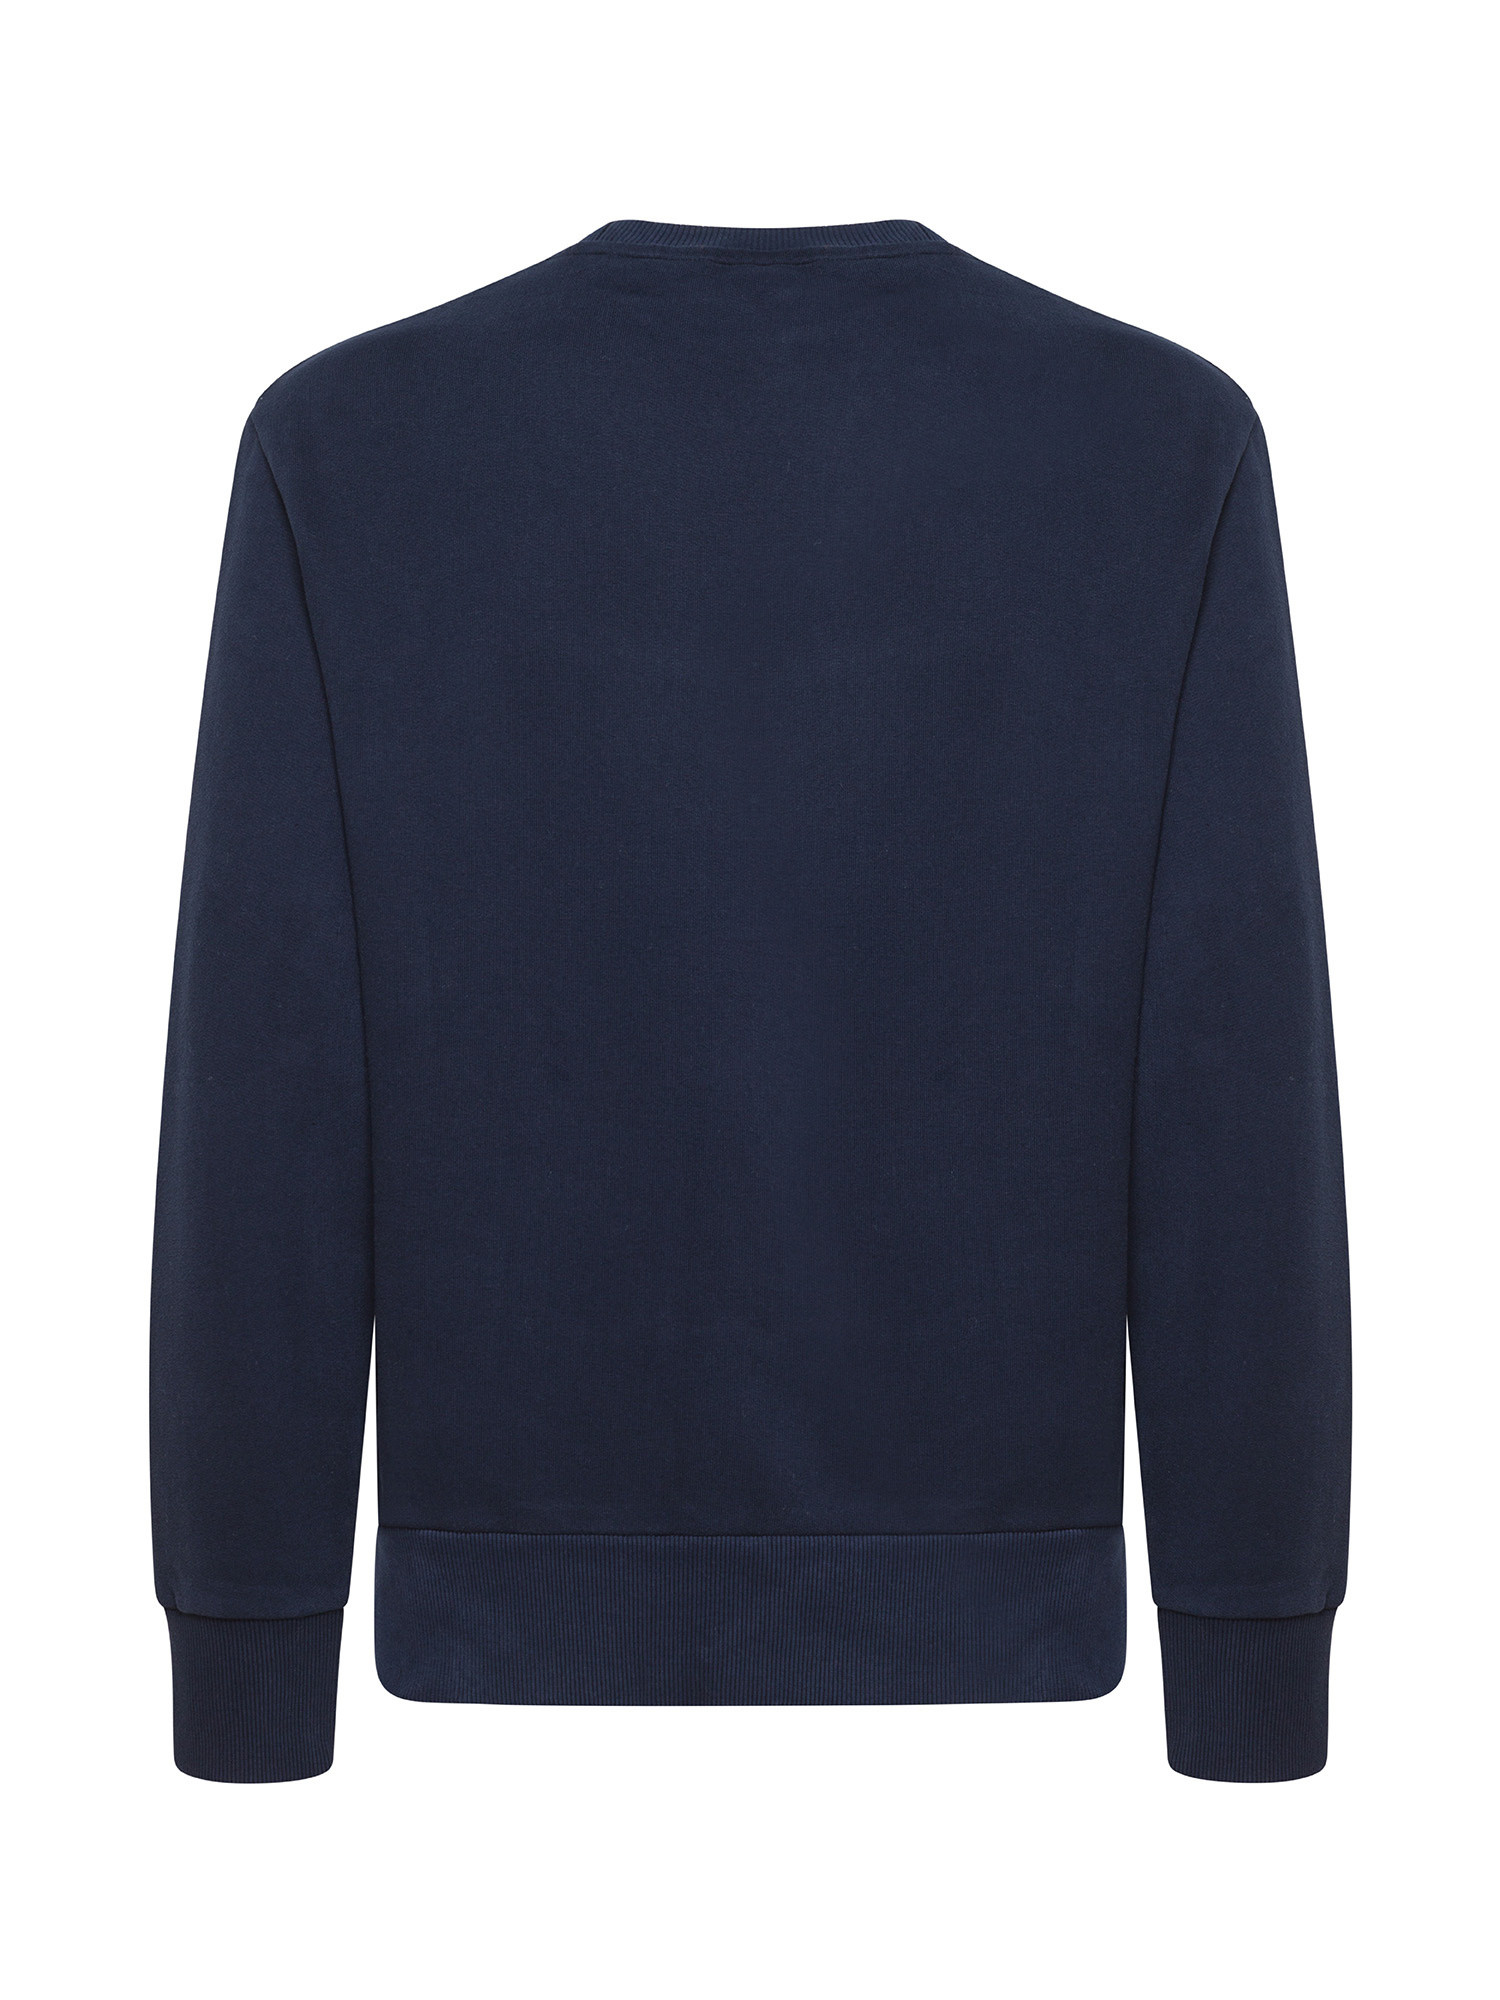 Superdry - Crewneck sweatshirt with print, Dark Blue, large image number 1